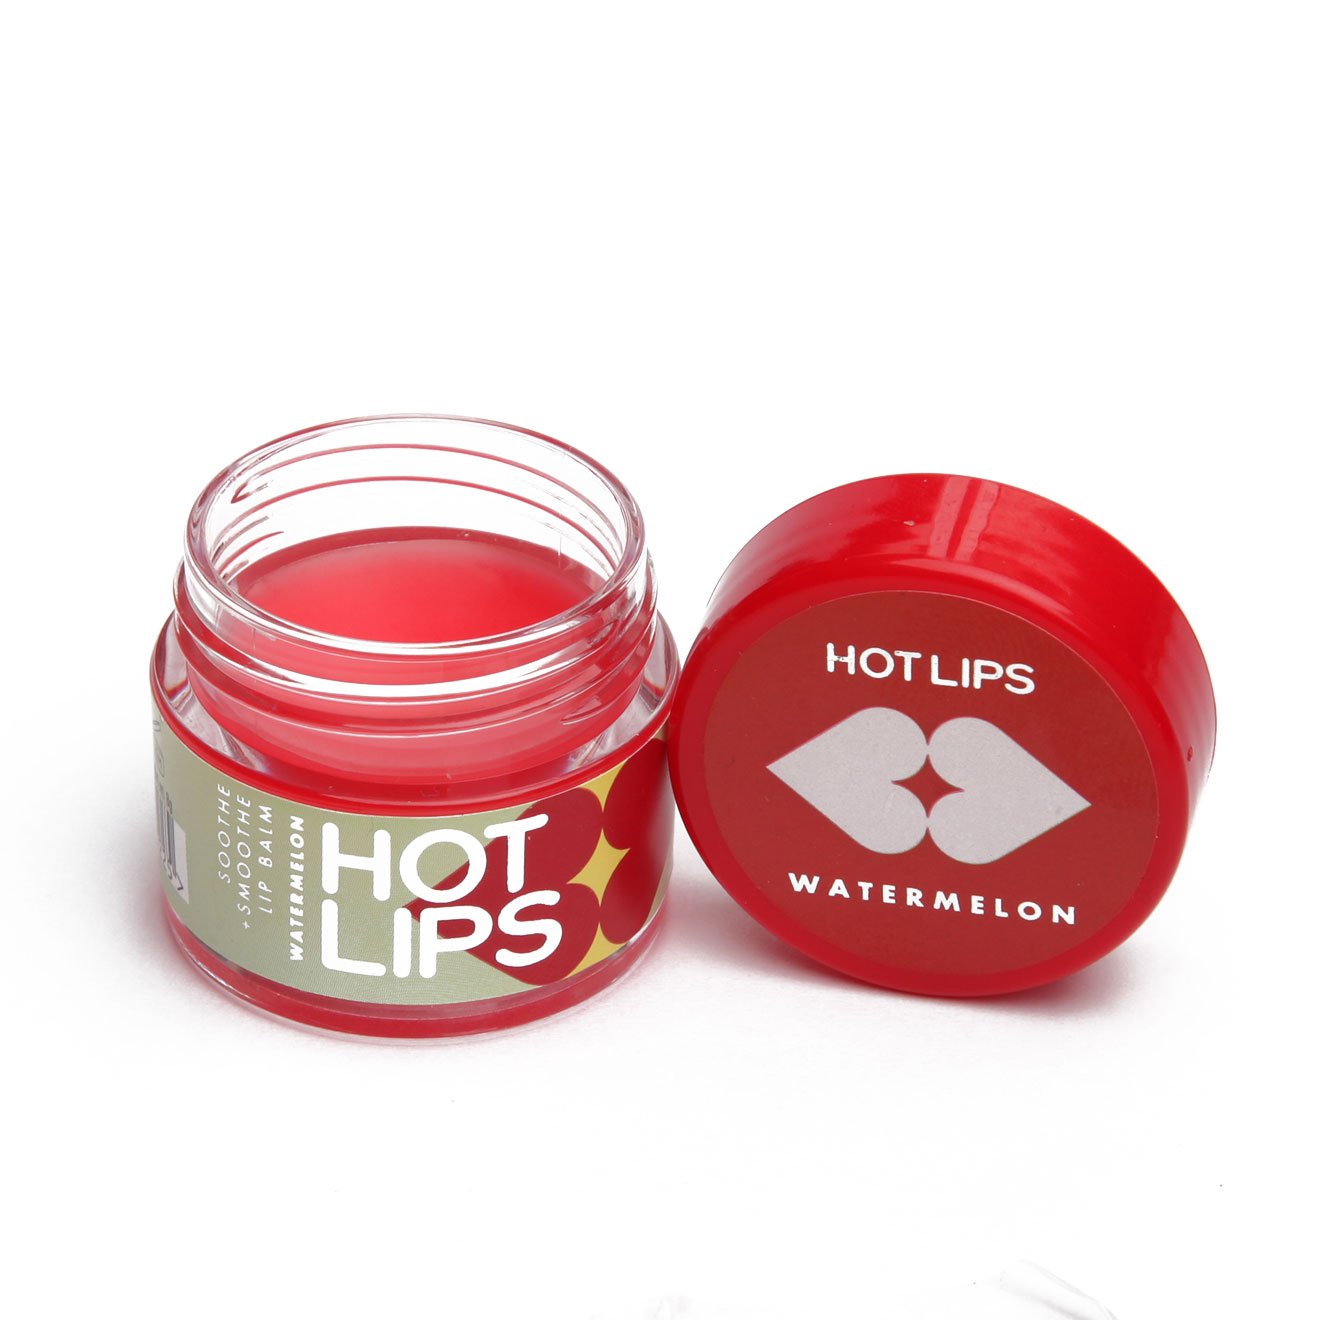 Hot Lips- Kissing Fruit Lip Balm